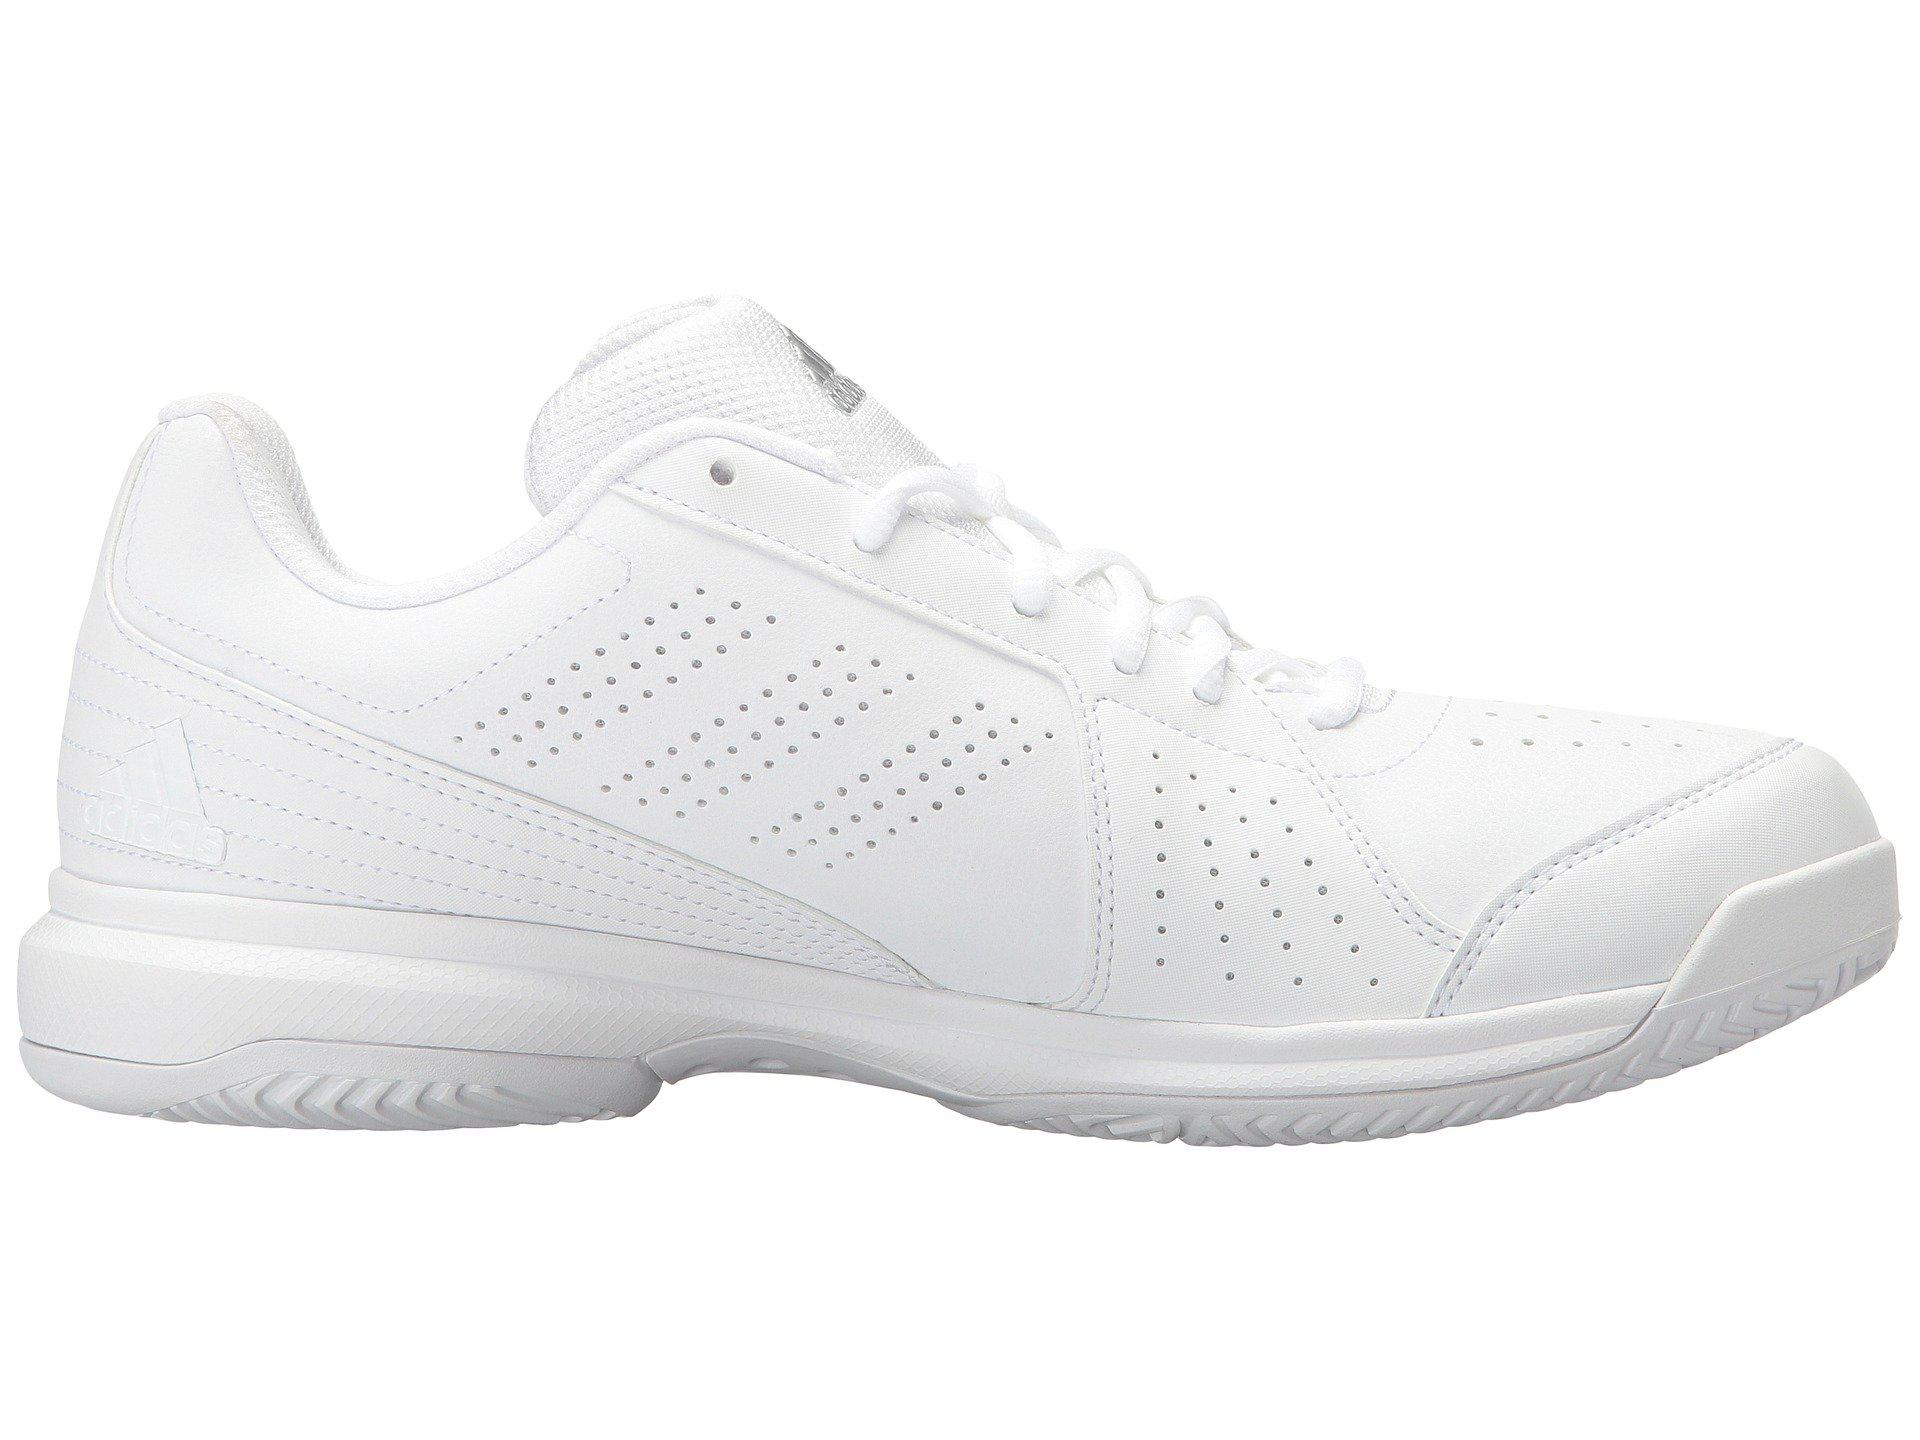 Lyst - Adidas Adizero Approach in White for Men